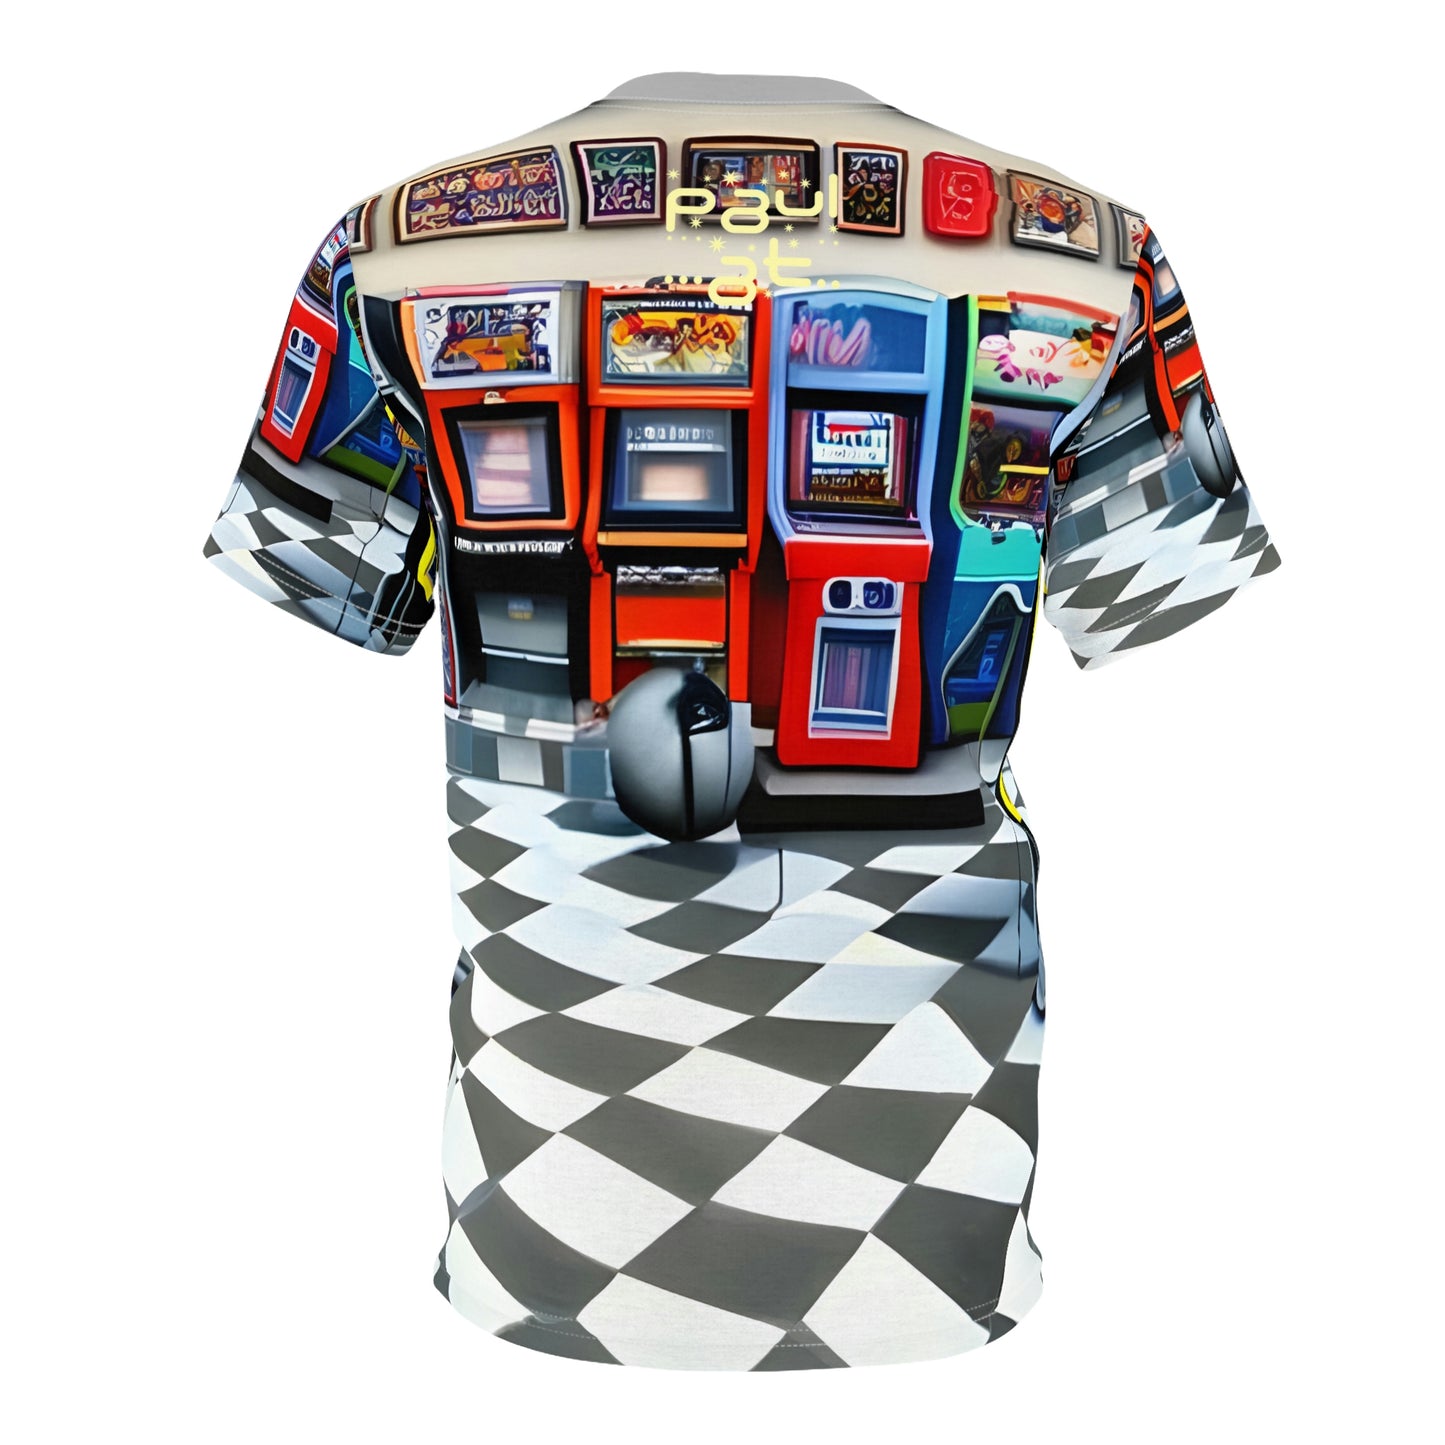 Gamer's Arcade Unisex T-Shirt